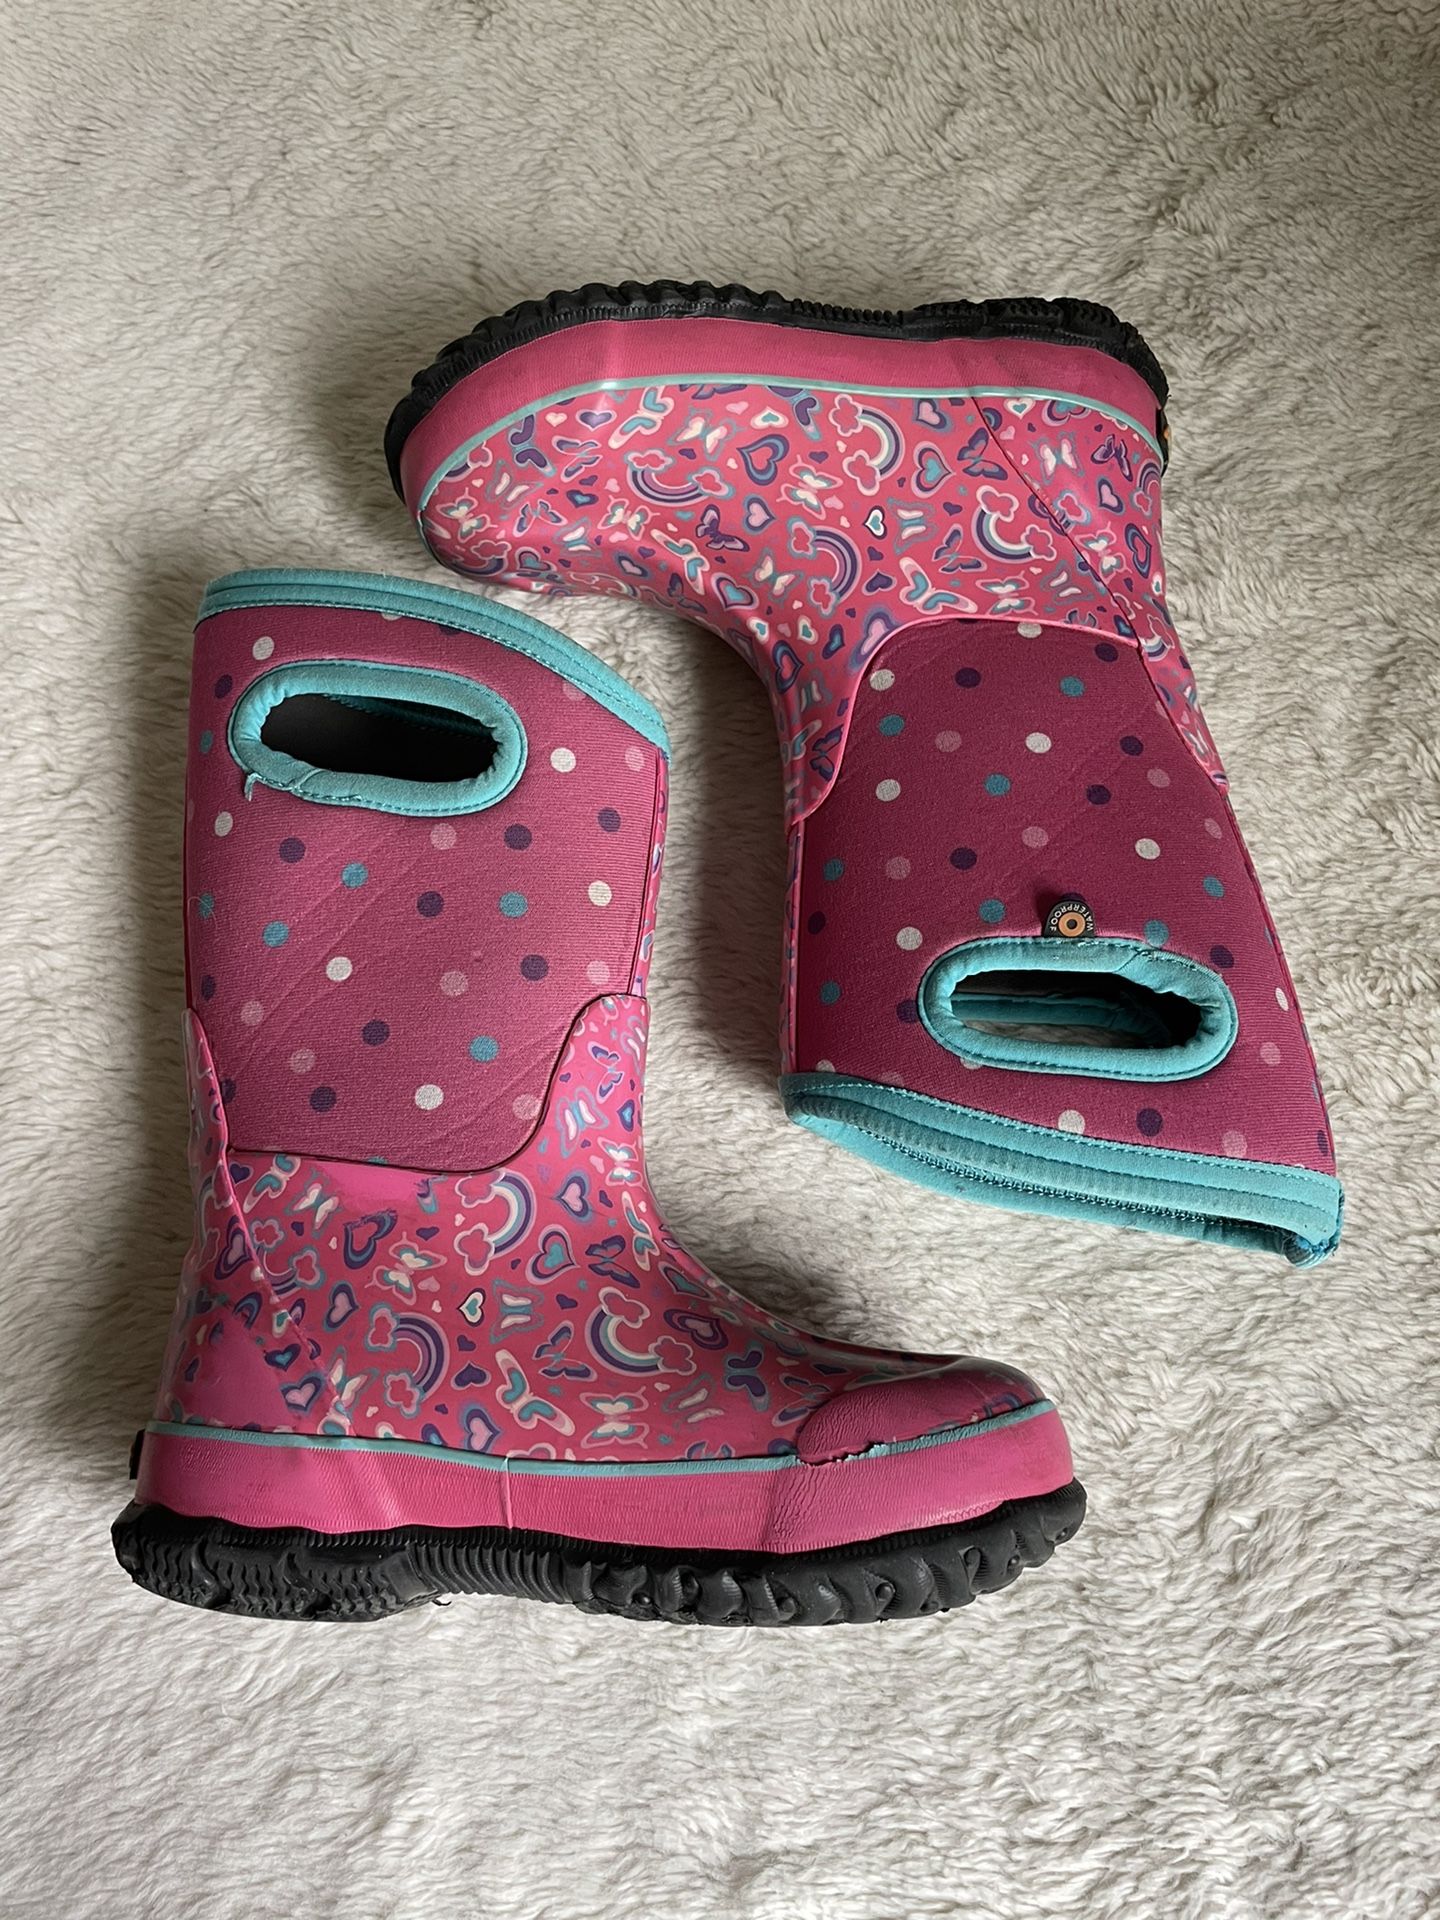 Bogs Kids Girls Size 13  Insulated Boots Snow Slush Rain Pink Hearts Rainbow 